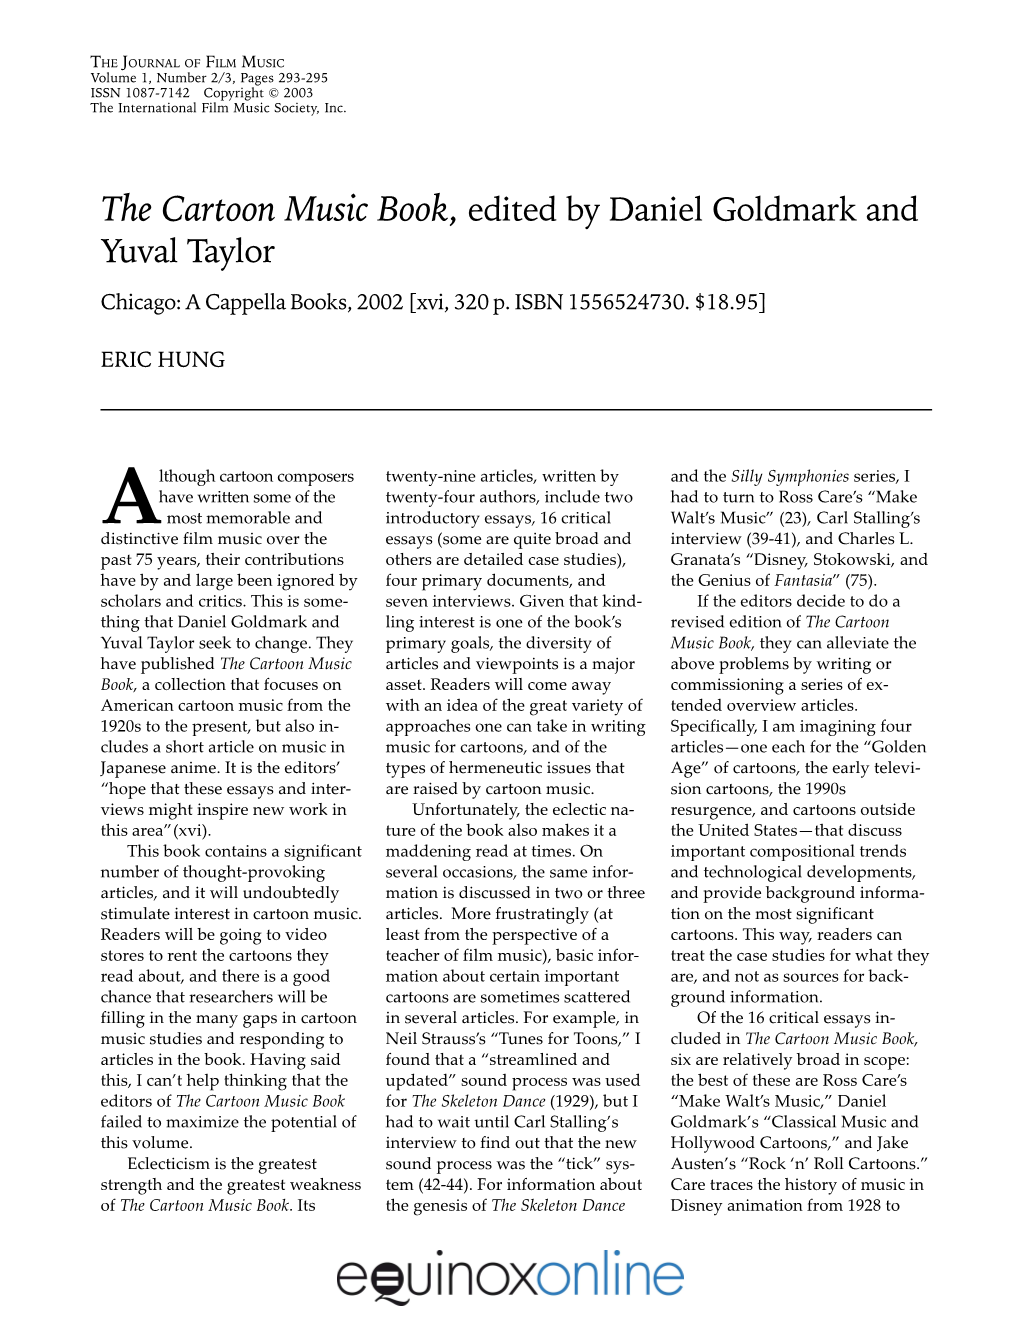 The Cartoon Music Book, Edited by Daniel Goldmark and Yuval Taylor